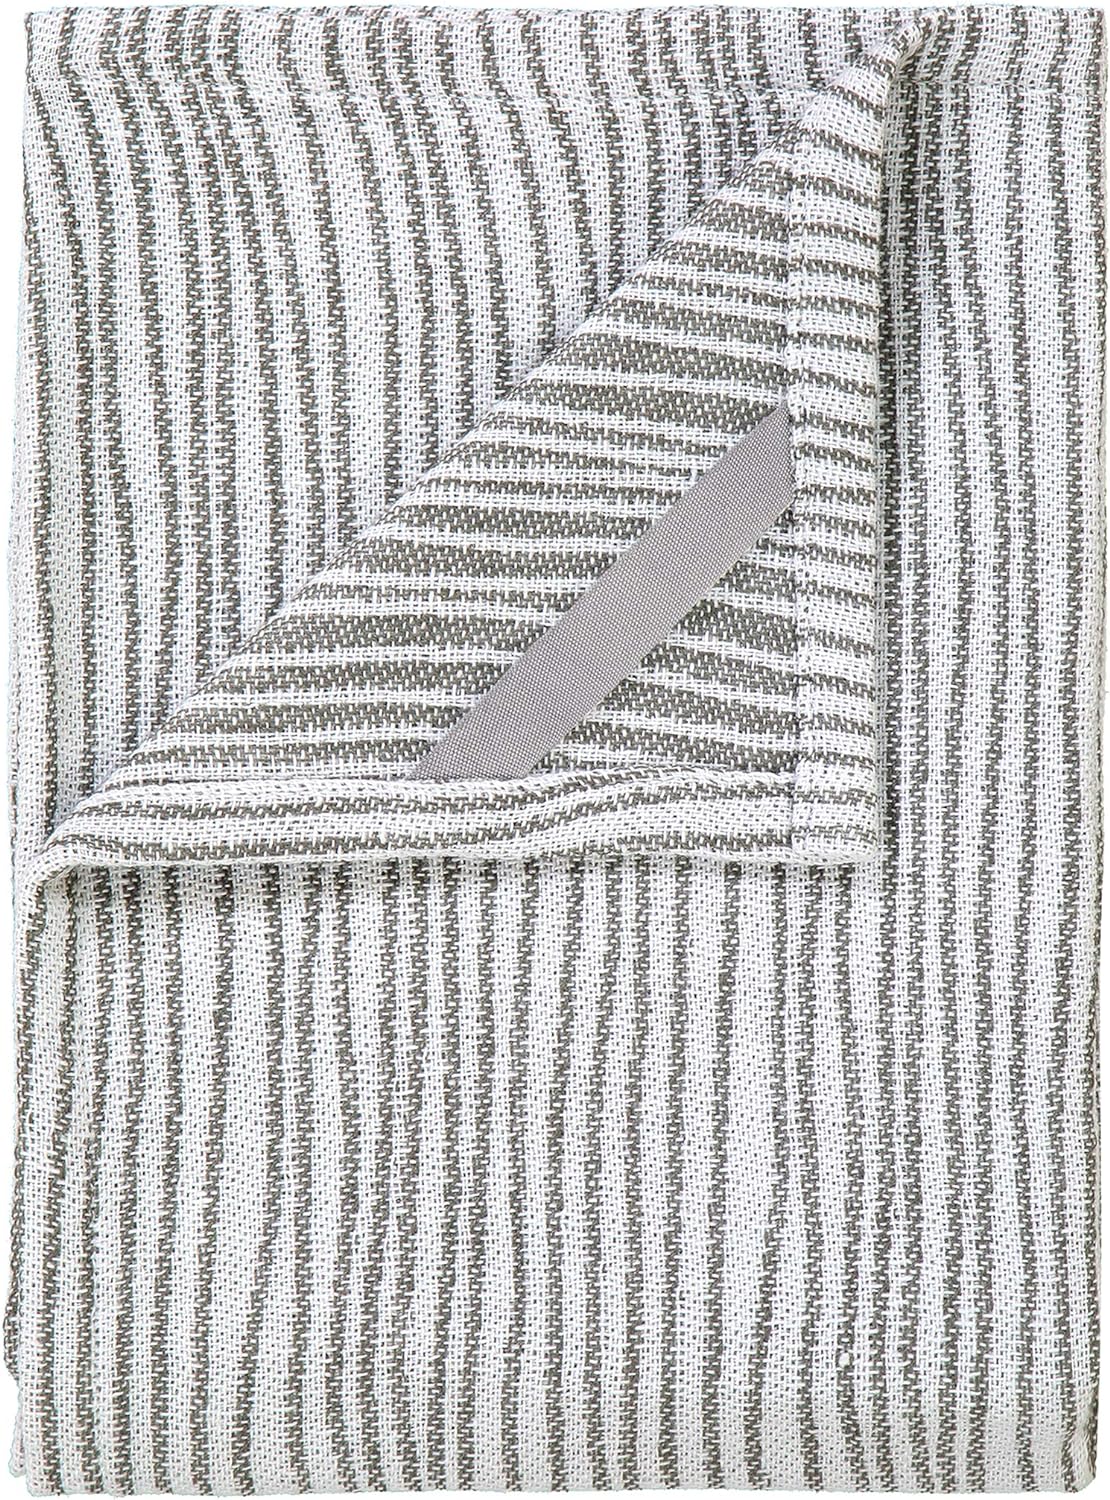 Blomus - Tea Towels, Dry Towels Belt - Lily White/Micro Chip - Cotton - 50 x 70 cm - Set of 2